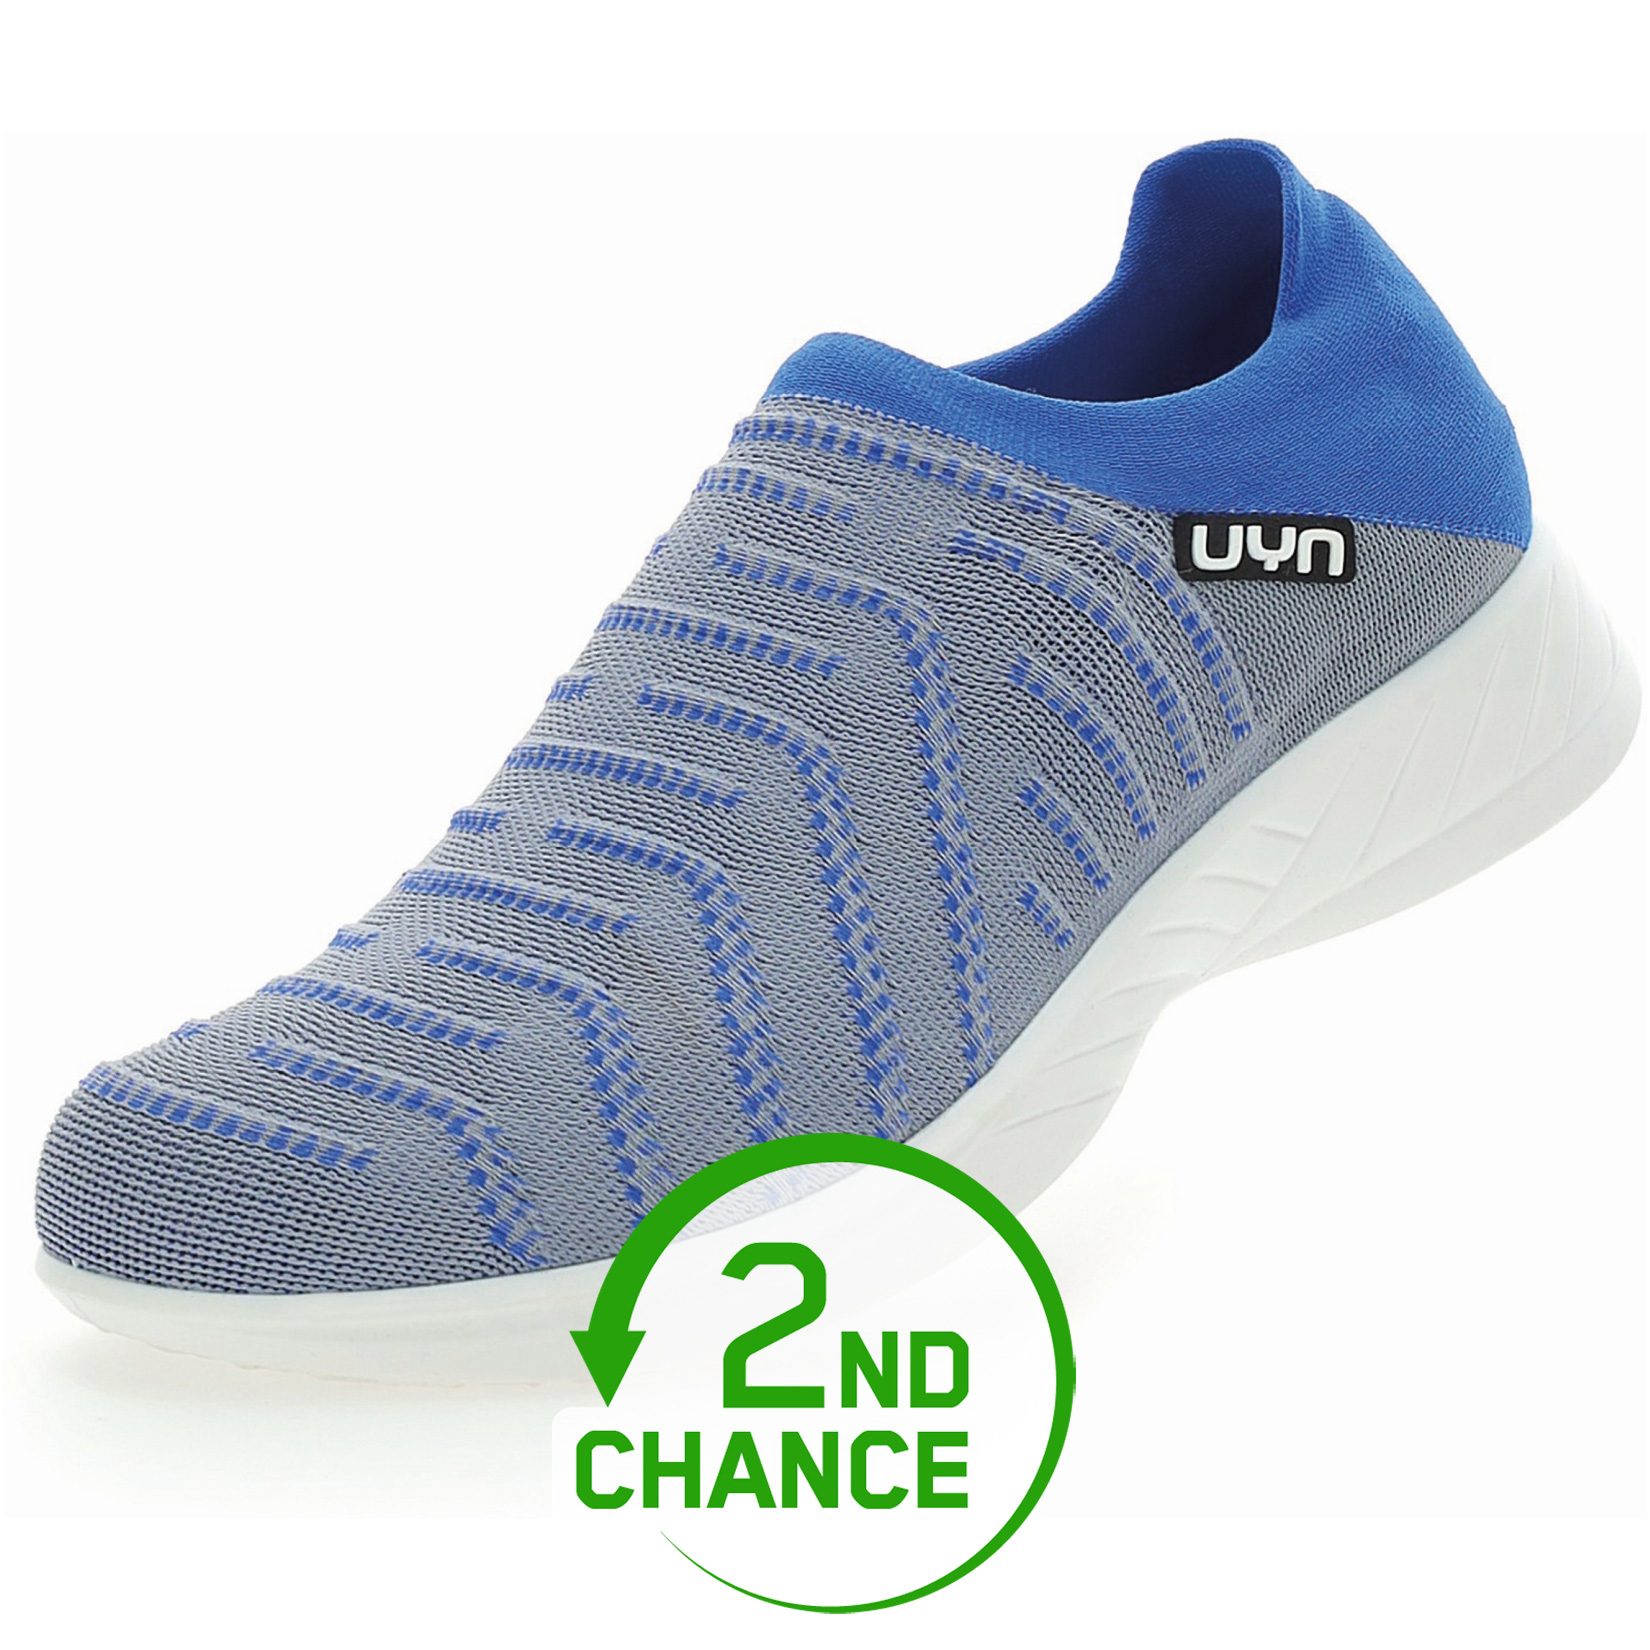 Produktbild von UYN 3D Ribs Schuhe - Grau/Blau - B-Ware